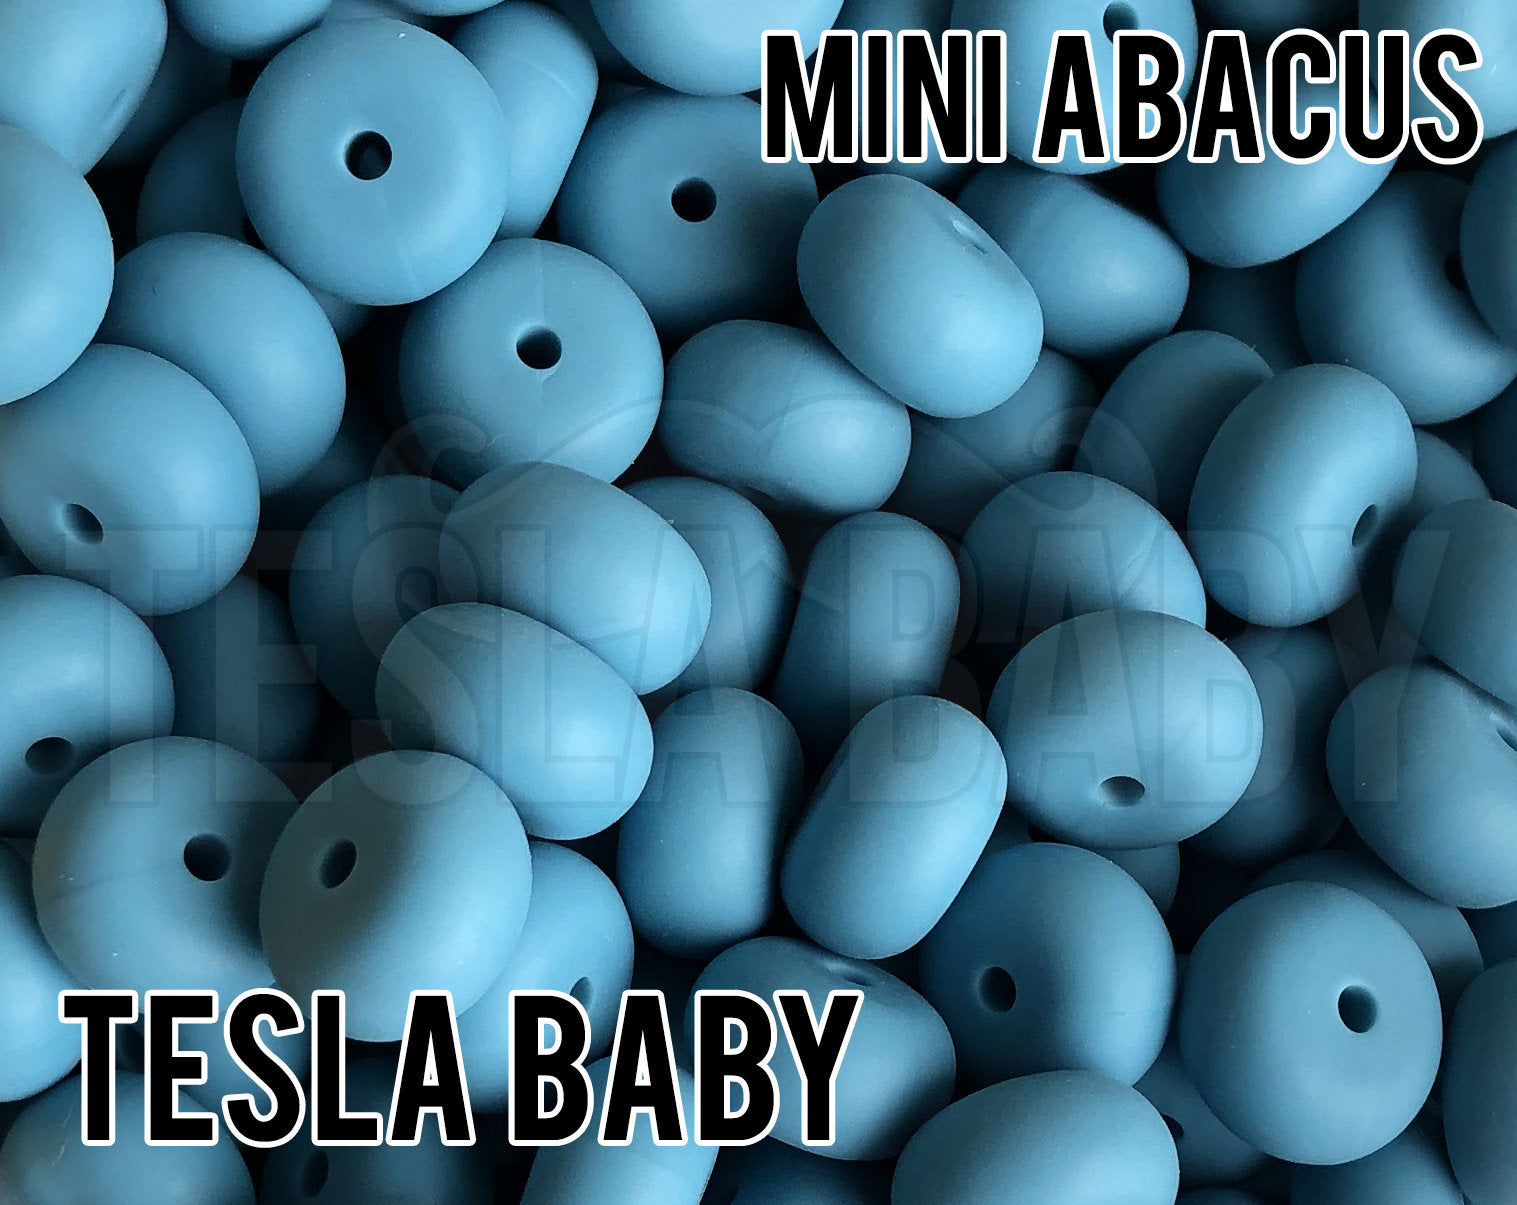 Mini Abacus Tesla Baby Blue Silicone Beads 5-1,000 (aka medium blue, teal blue, sea blue) Bulk Silicone Beads Wholesale